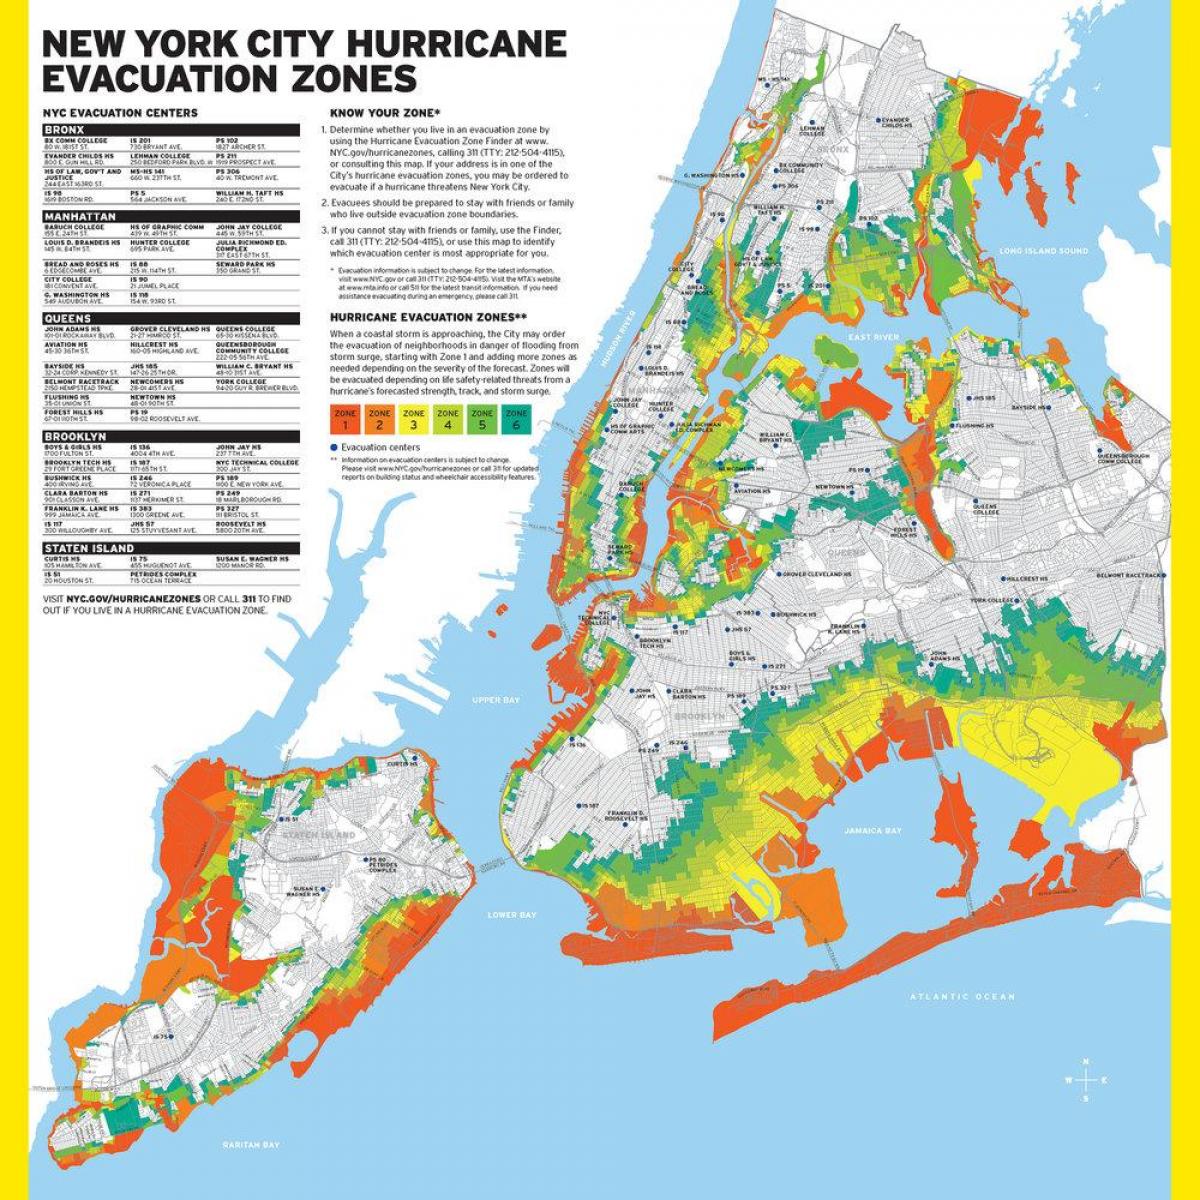 Manhattan sel bölgesi Haritayı göster